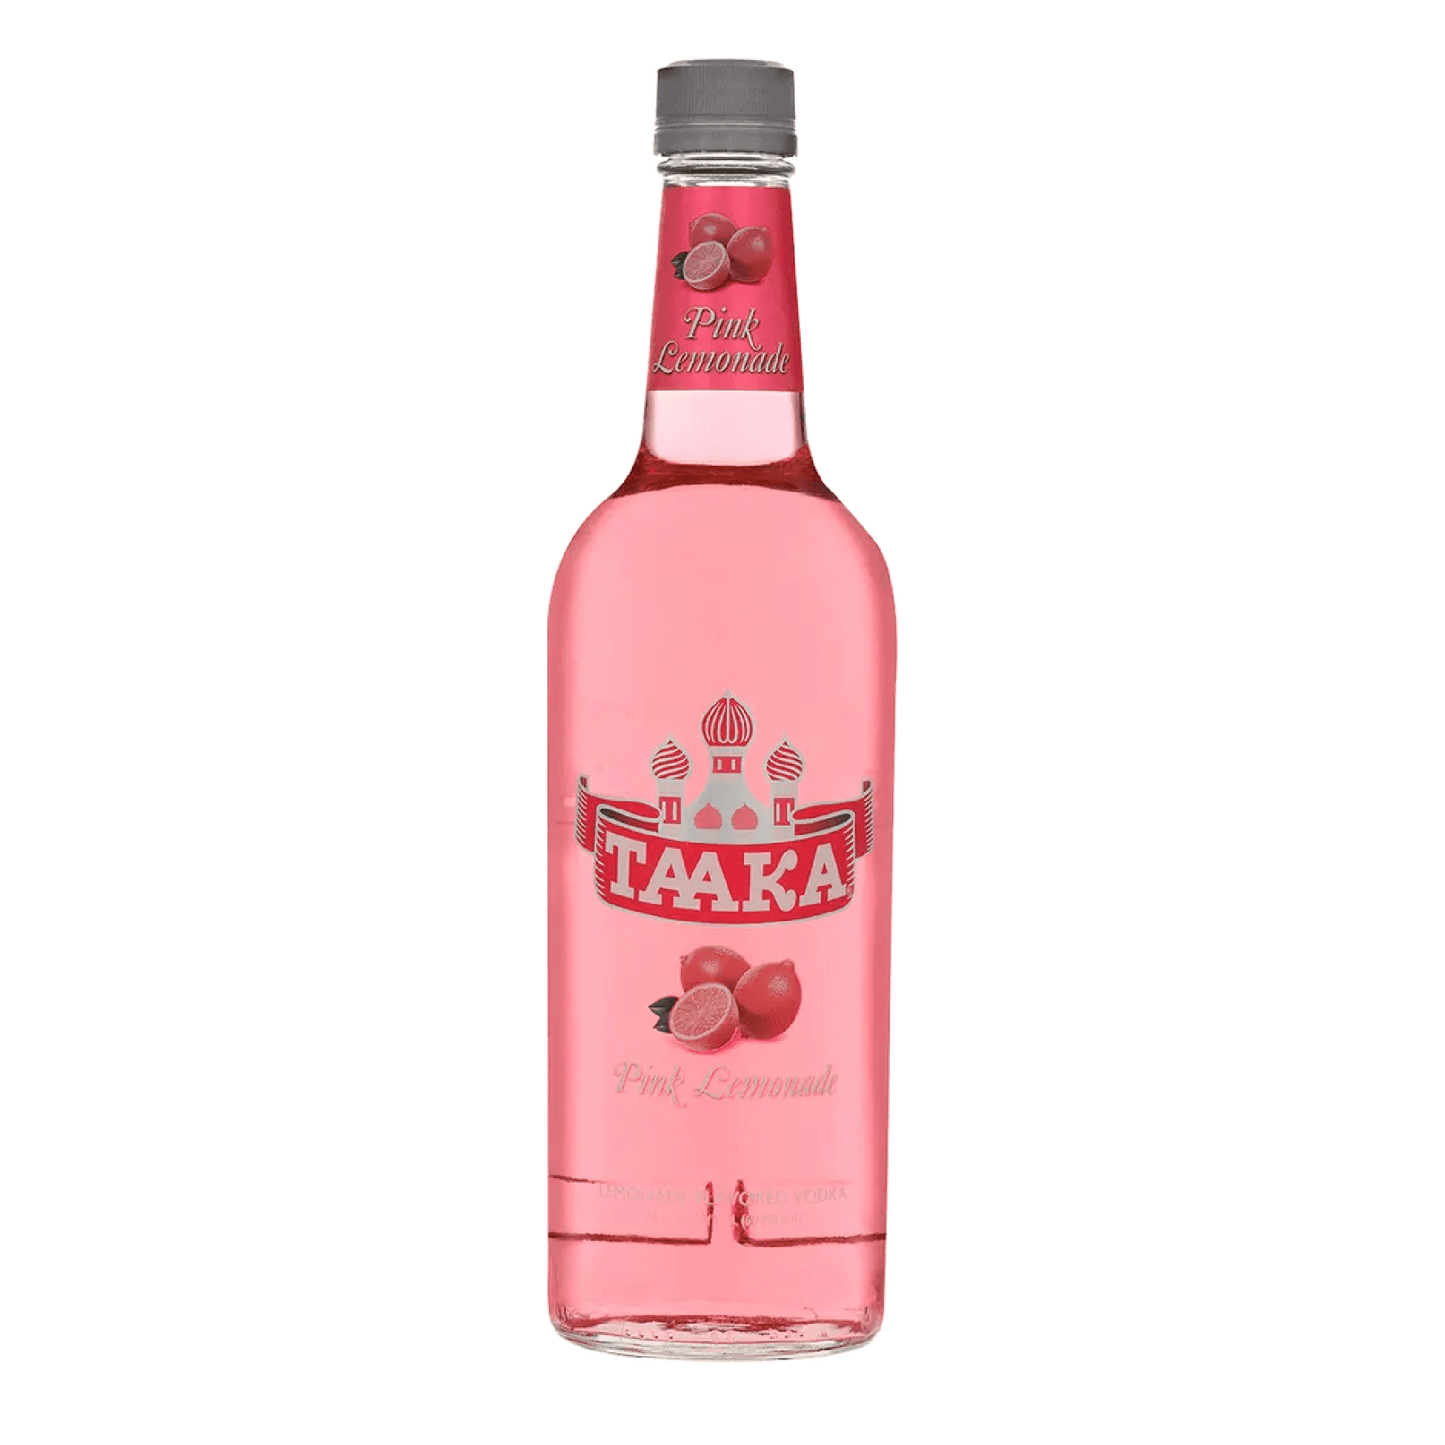 Taaka Pink Lemonade Vodka - Liquor Geeks